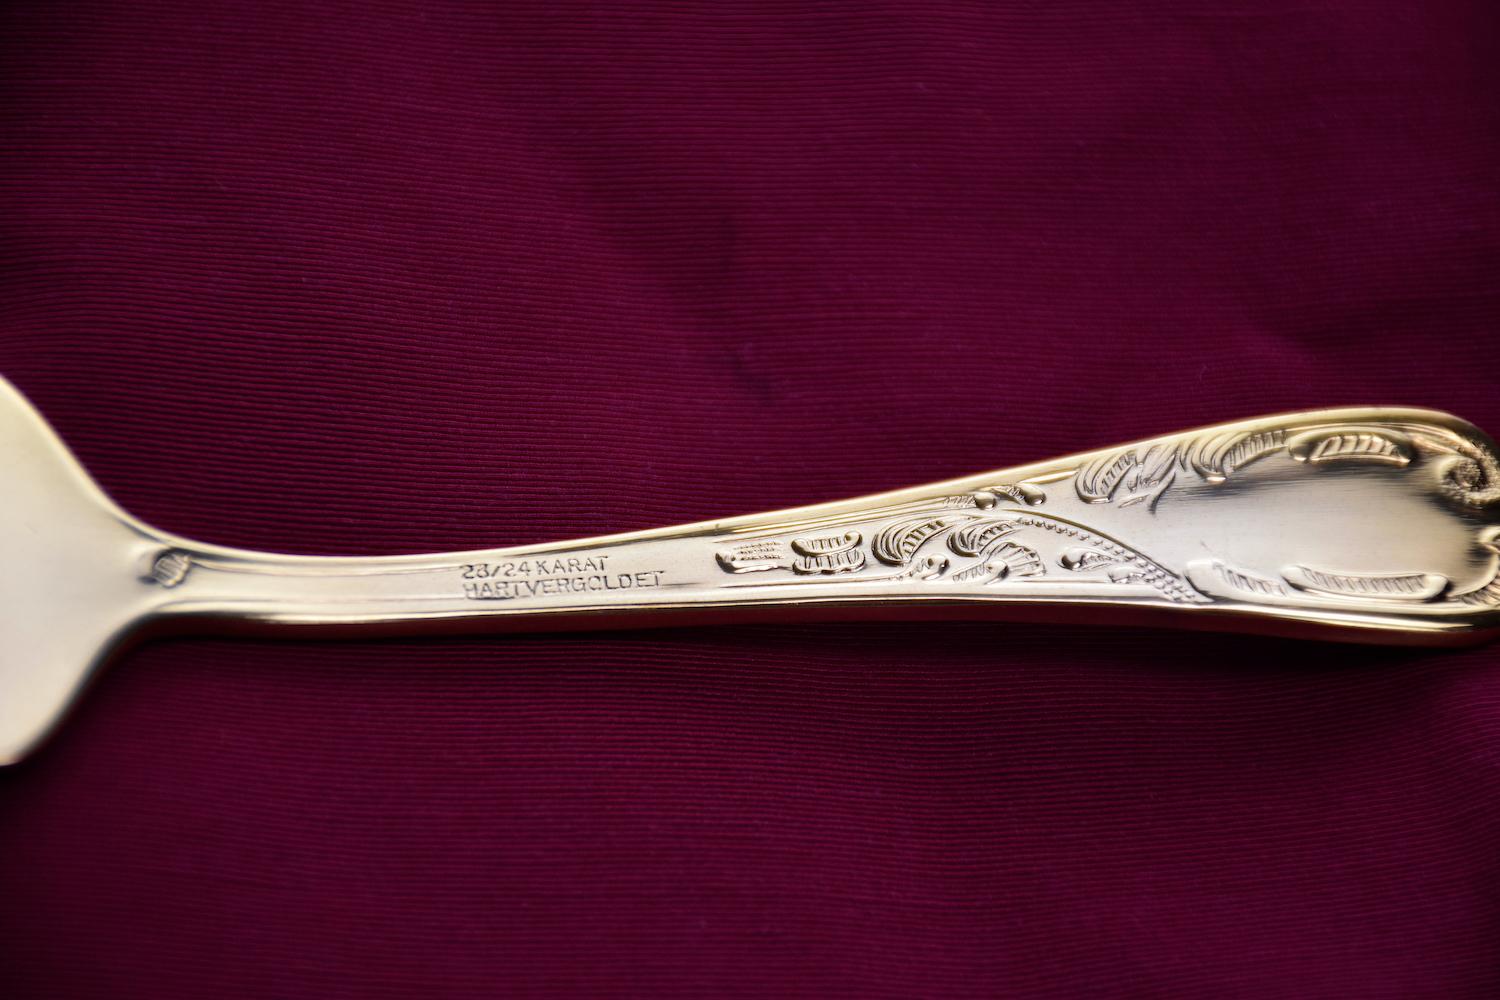 24 Karat 11 Pers, Flatware Cutlery Set by Nivella Solingen 6